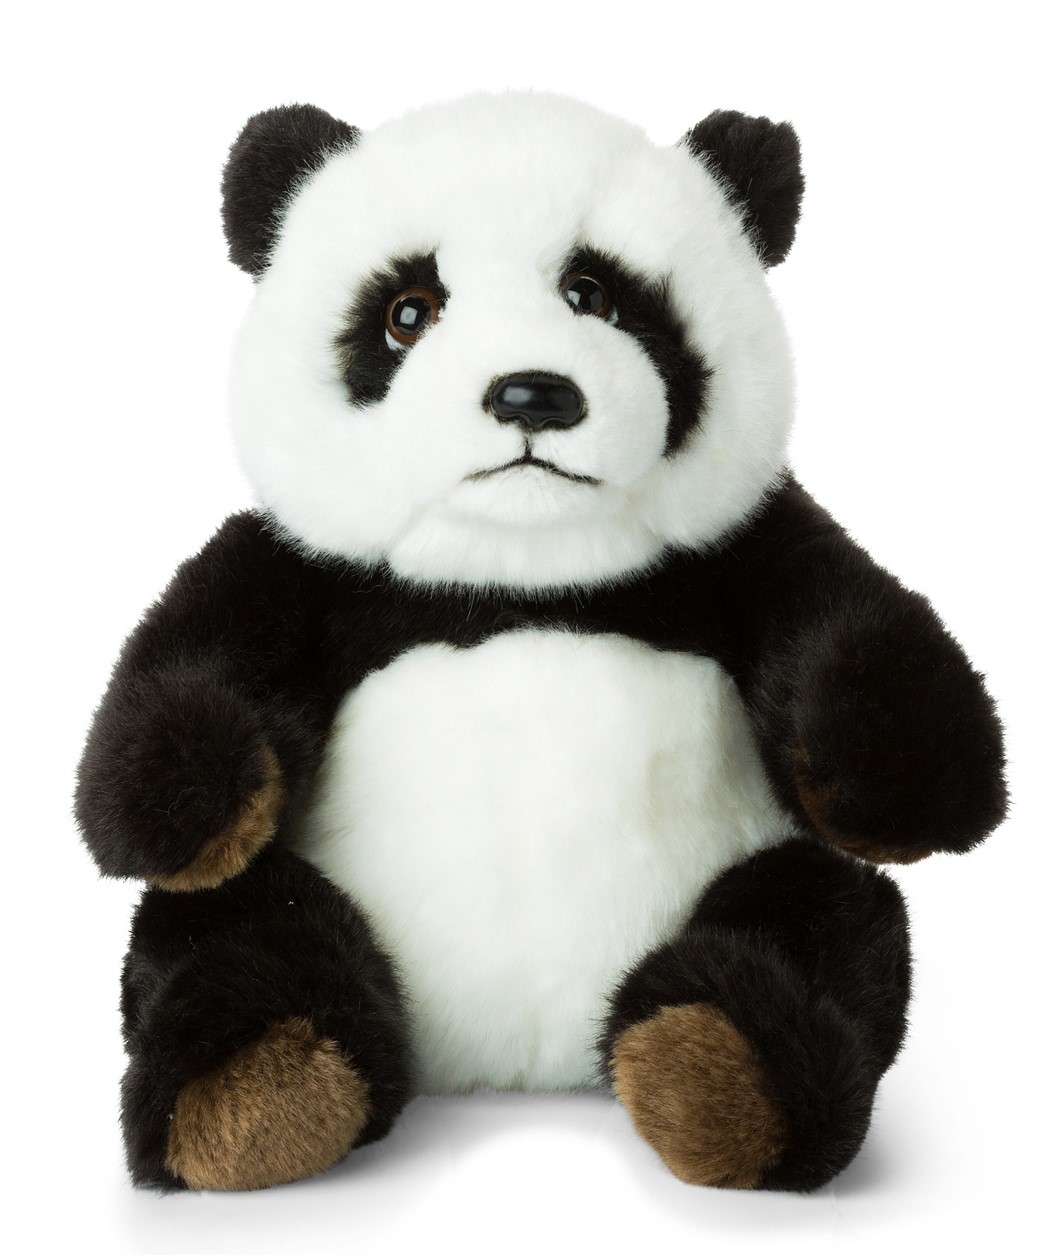 Panda - WWF (Vrldsnaturfonden)